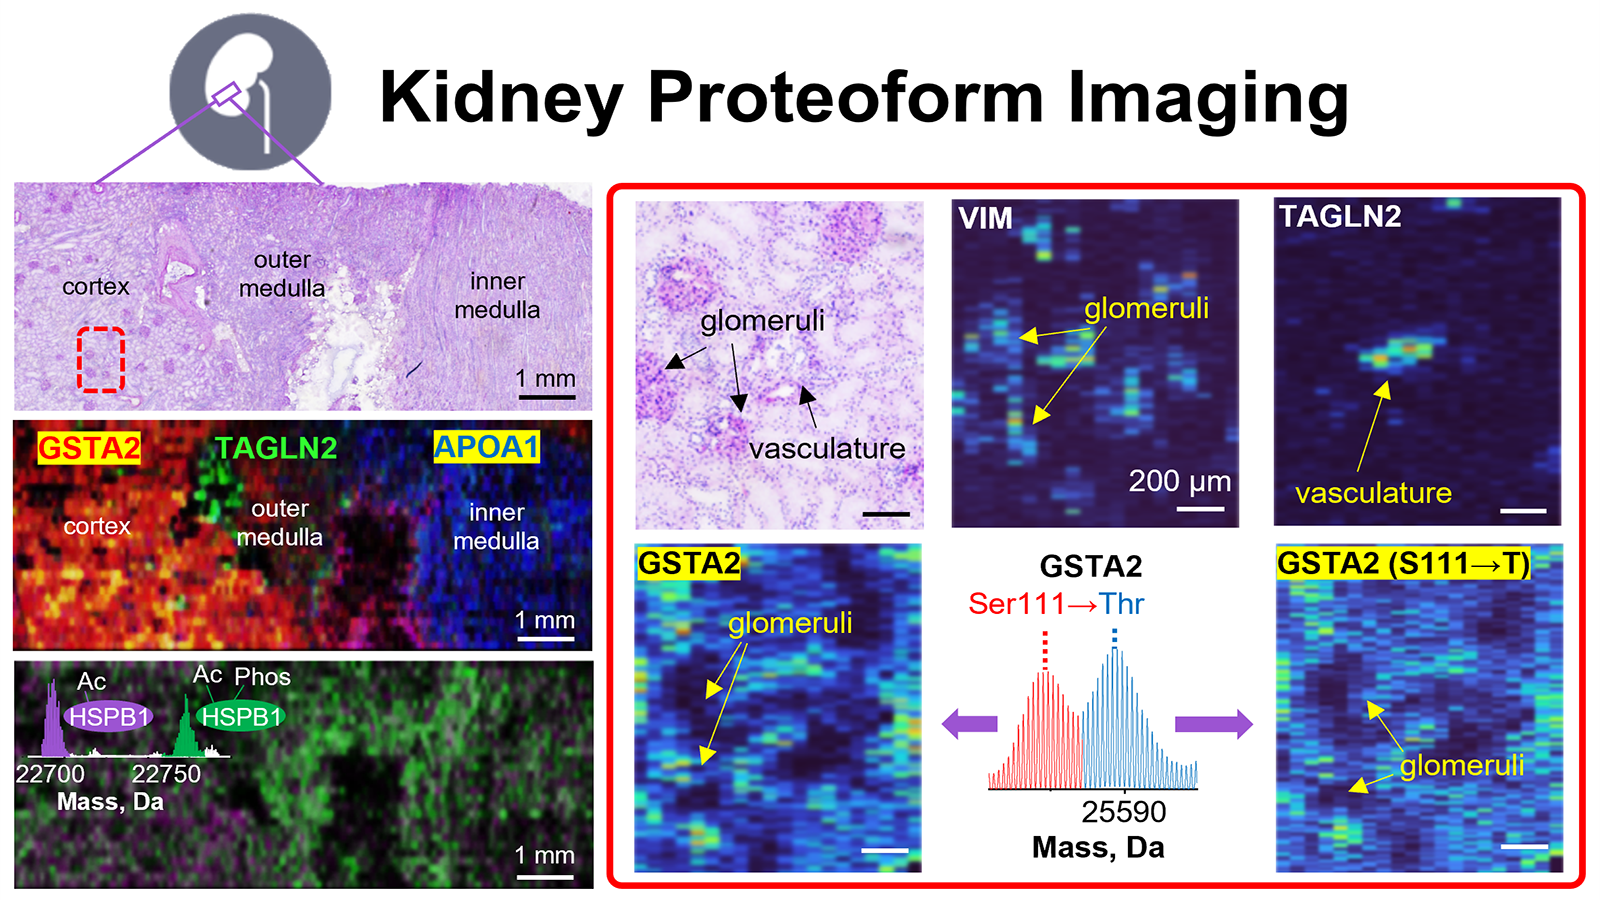 Proteoform imaging mass spec (PiMS) image of human kidney courtesy of Dr. Neil Kelleher at Northwestern